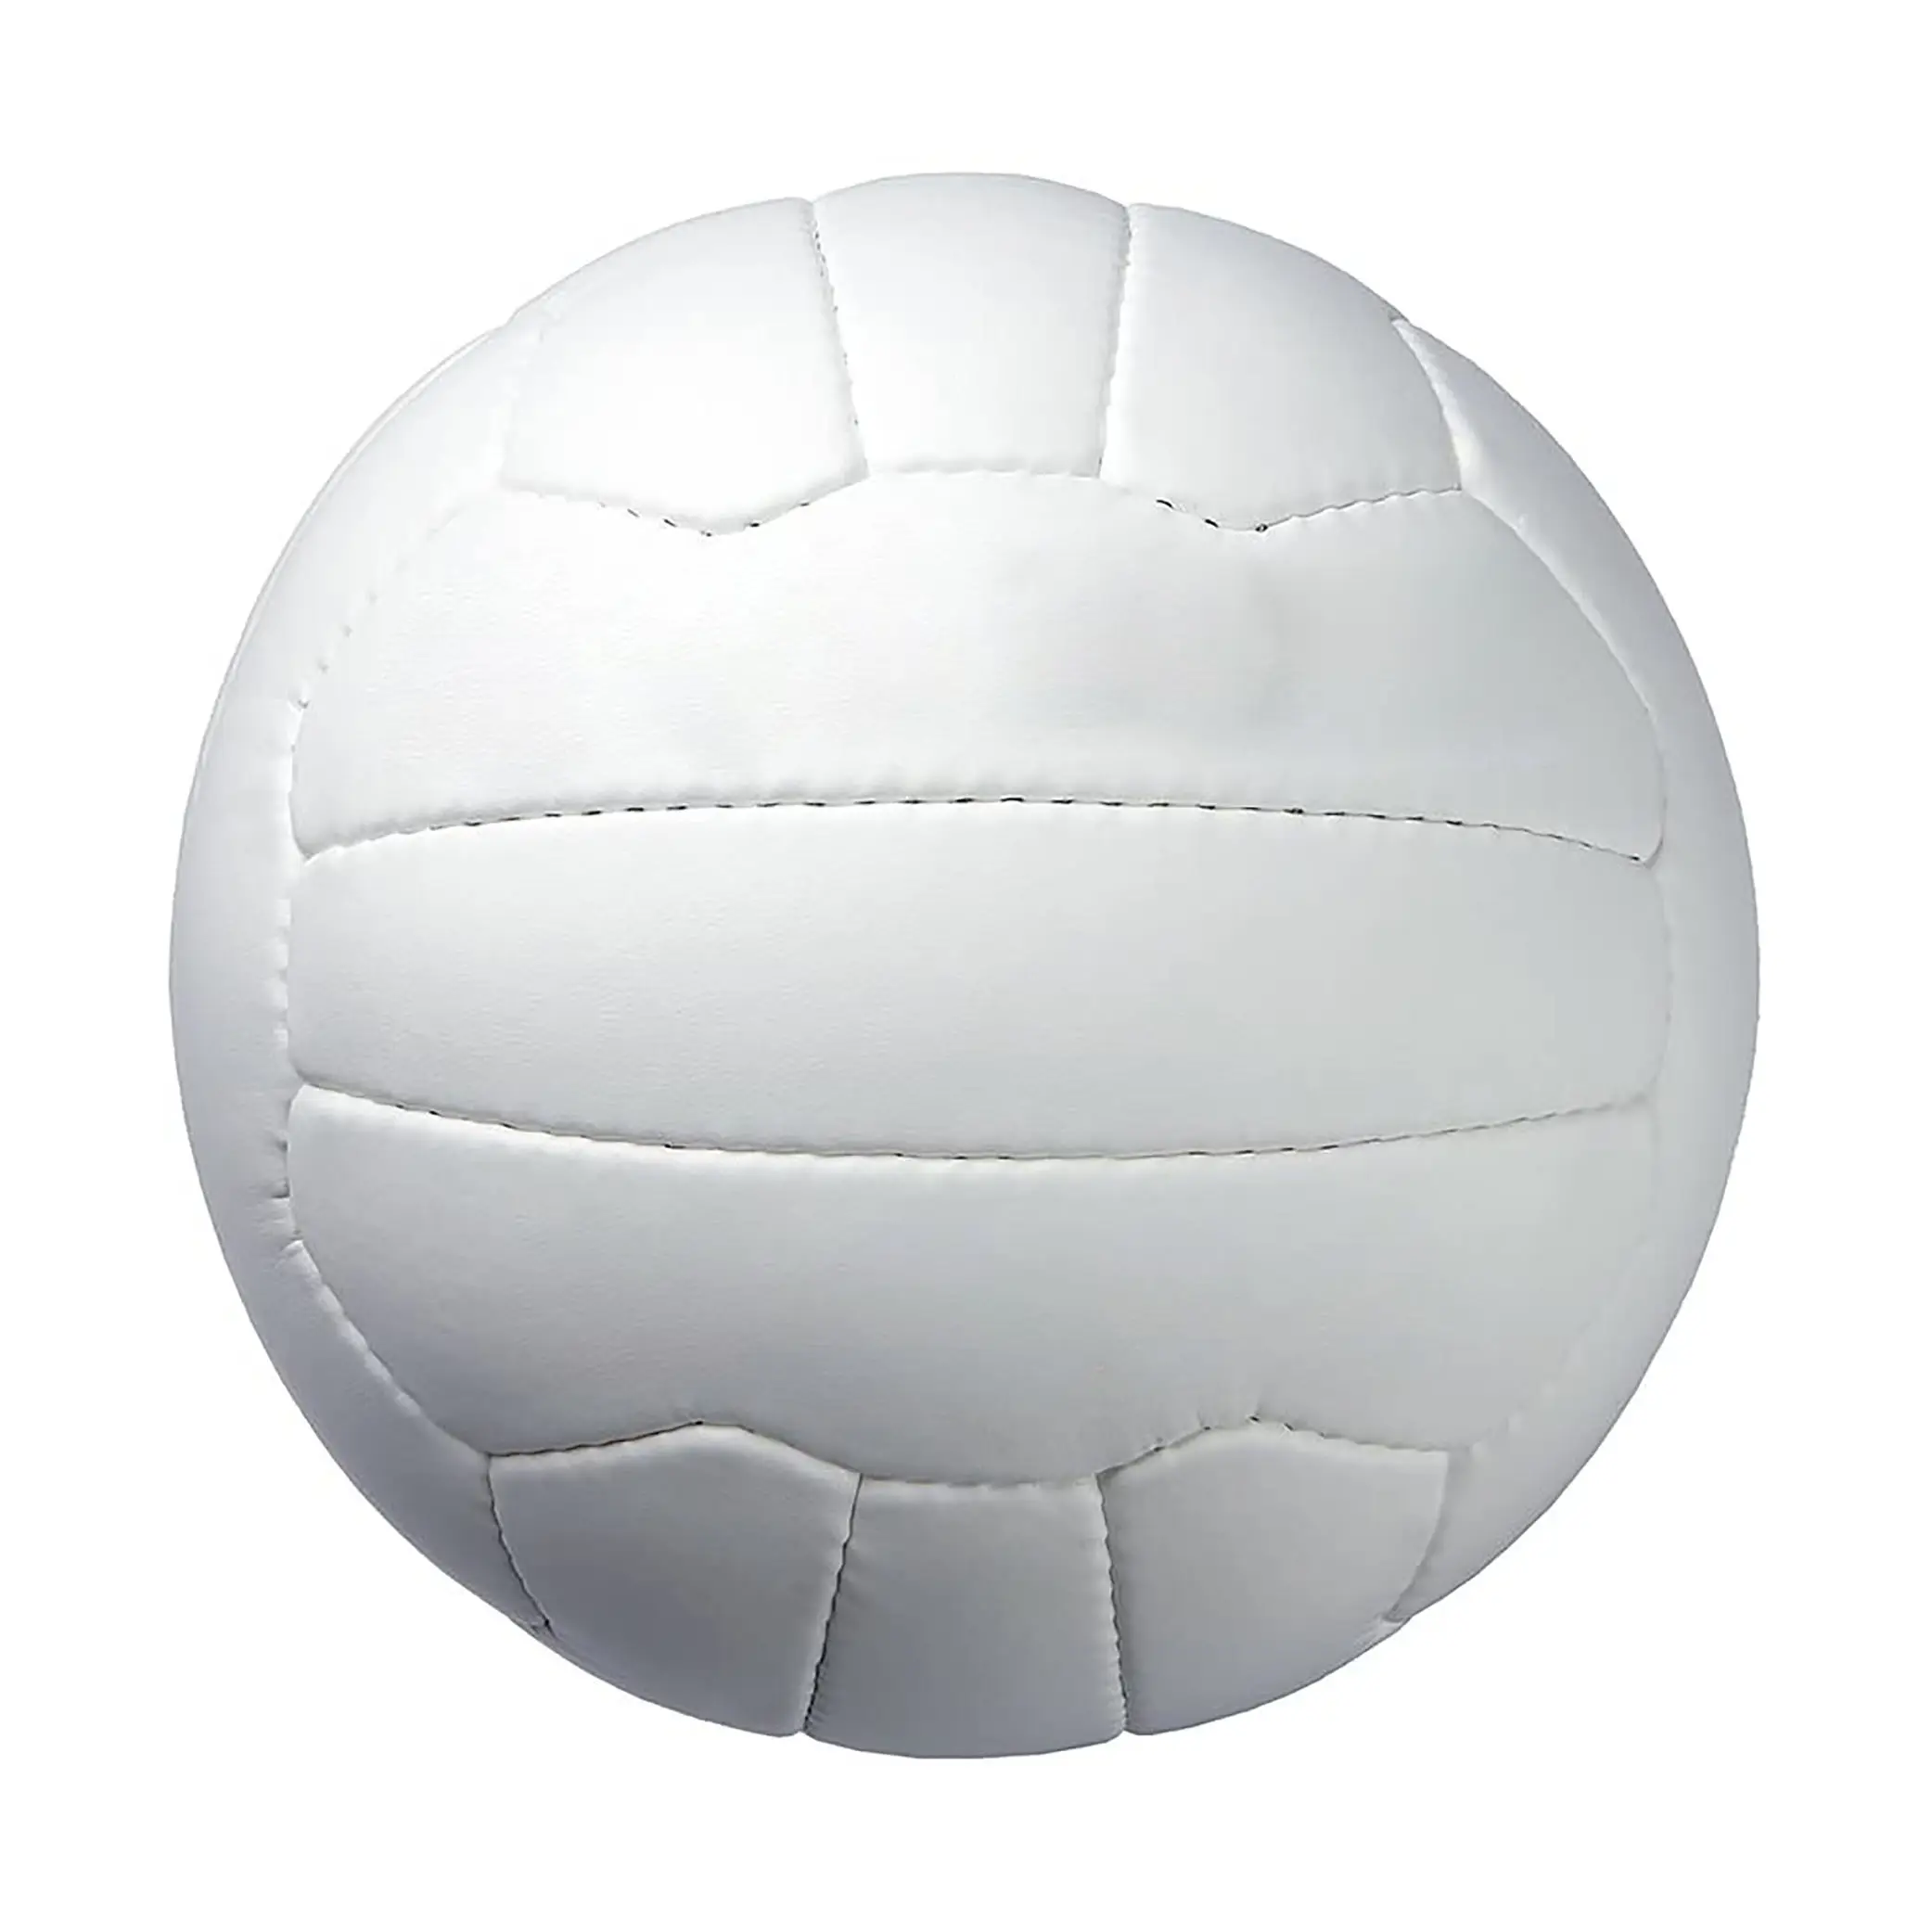 Beyaz renk yüksek kalite 100% hakiki deri yüksek kalite toptan futbol topu standart boyut özel futbol spor topu